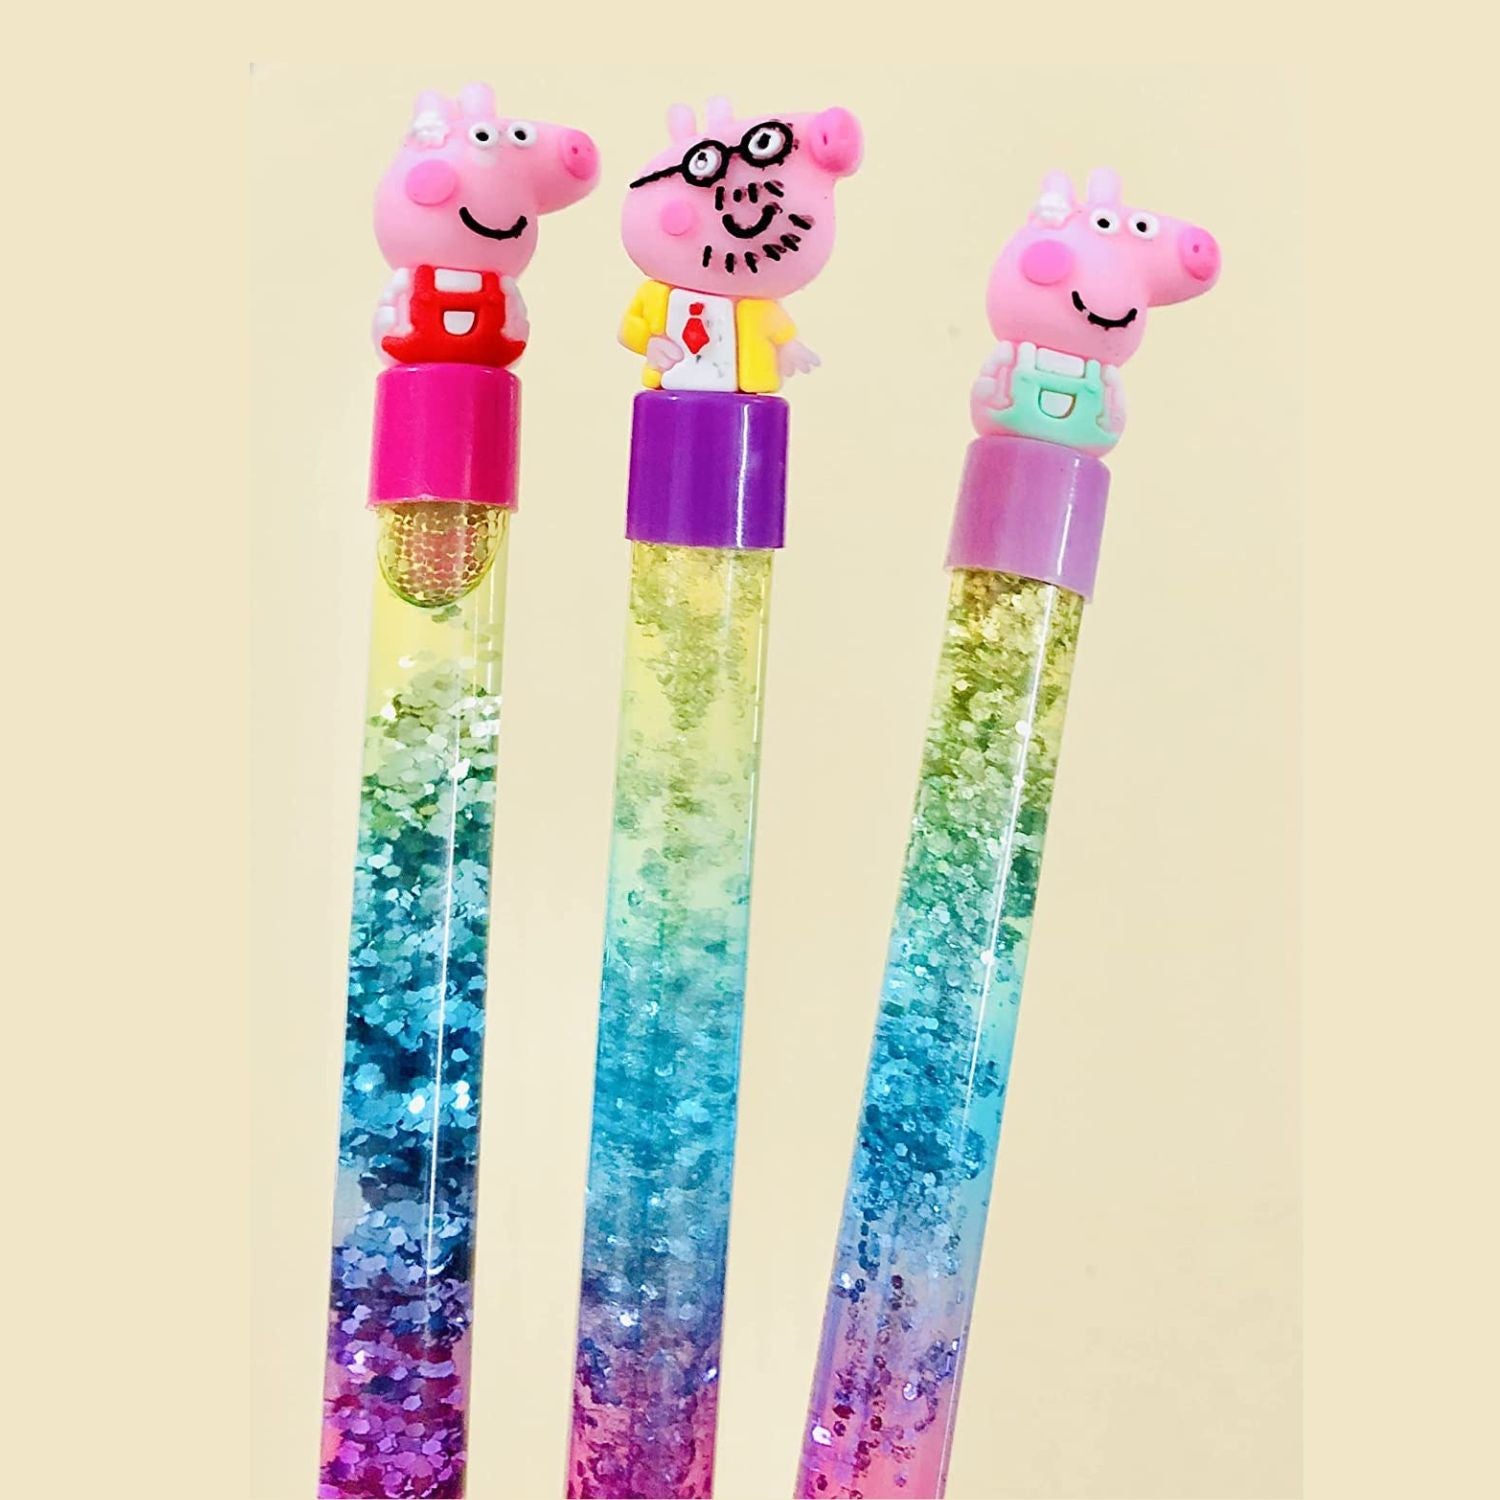 Glitter Gel Pen | Fancy Pen - Unicorn & Peppa Pig Design - for Kids, Girls, Boys, Students, School, Birthday Gift & Return Gifts - Apkamart 